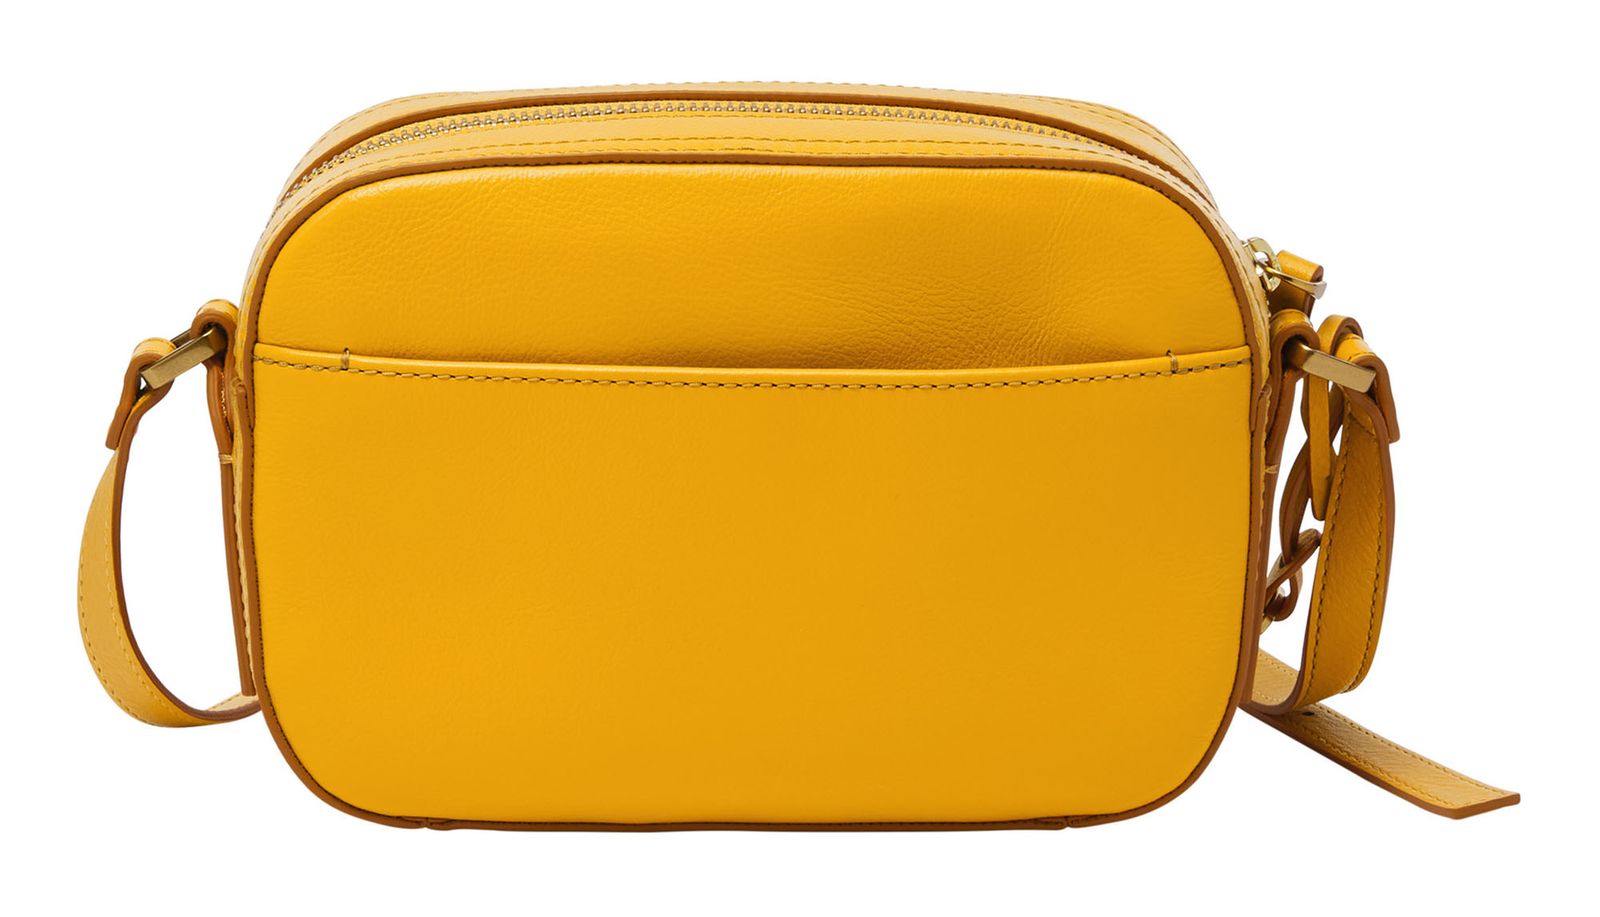 FOSSIL Liza Camera Bag Golden Yellow | Buy bags, purses & accessories ...